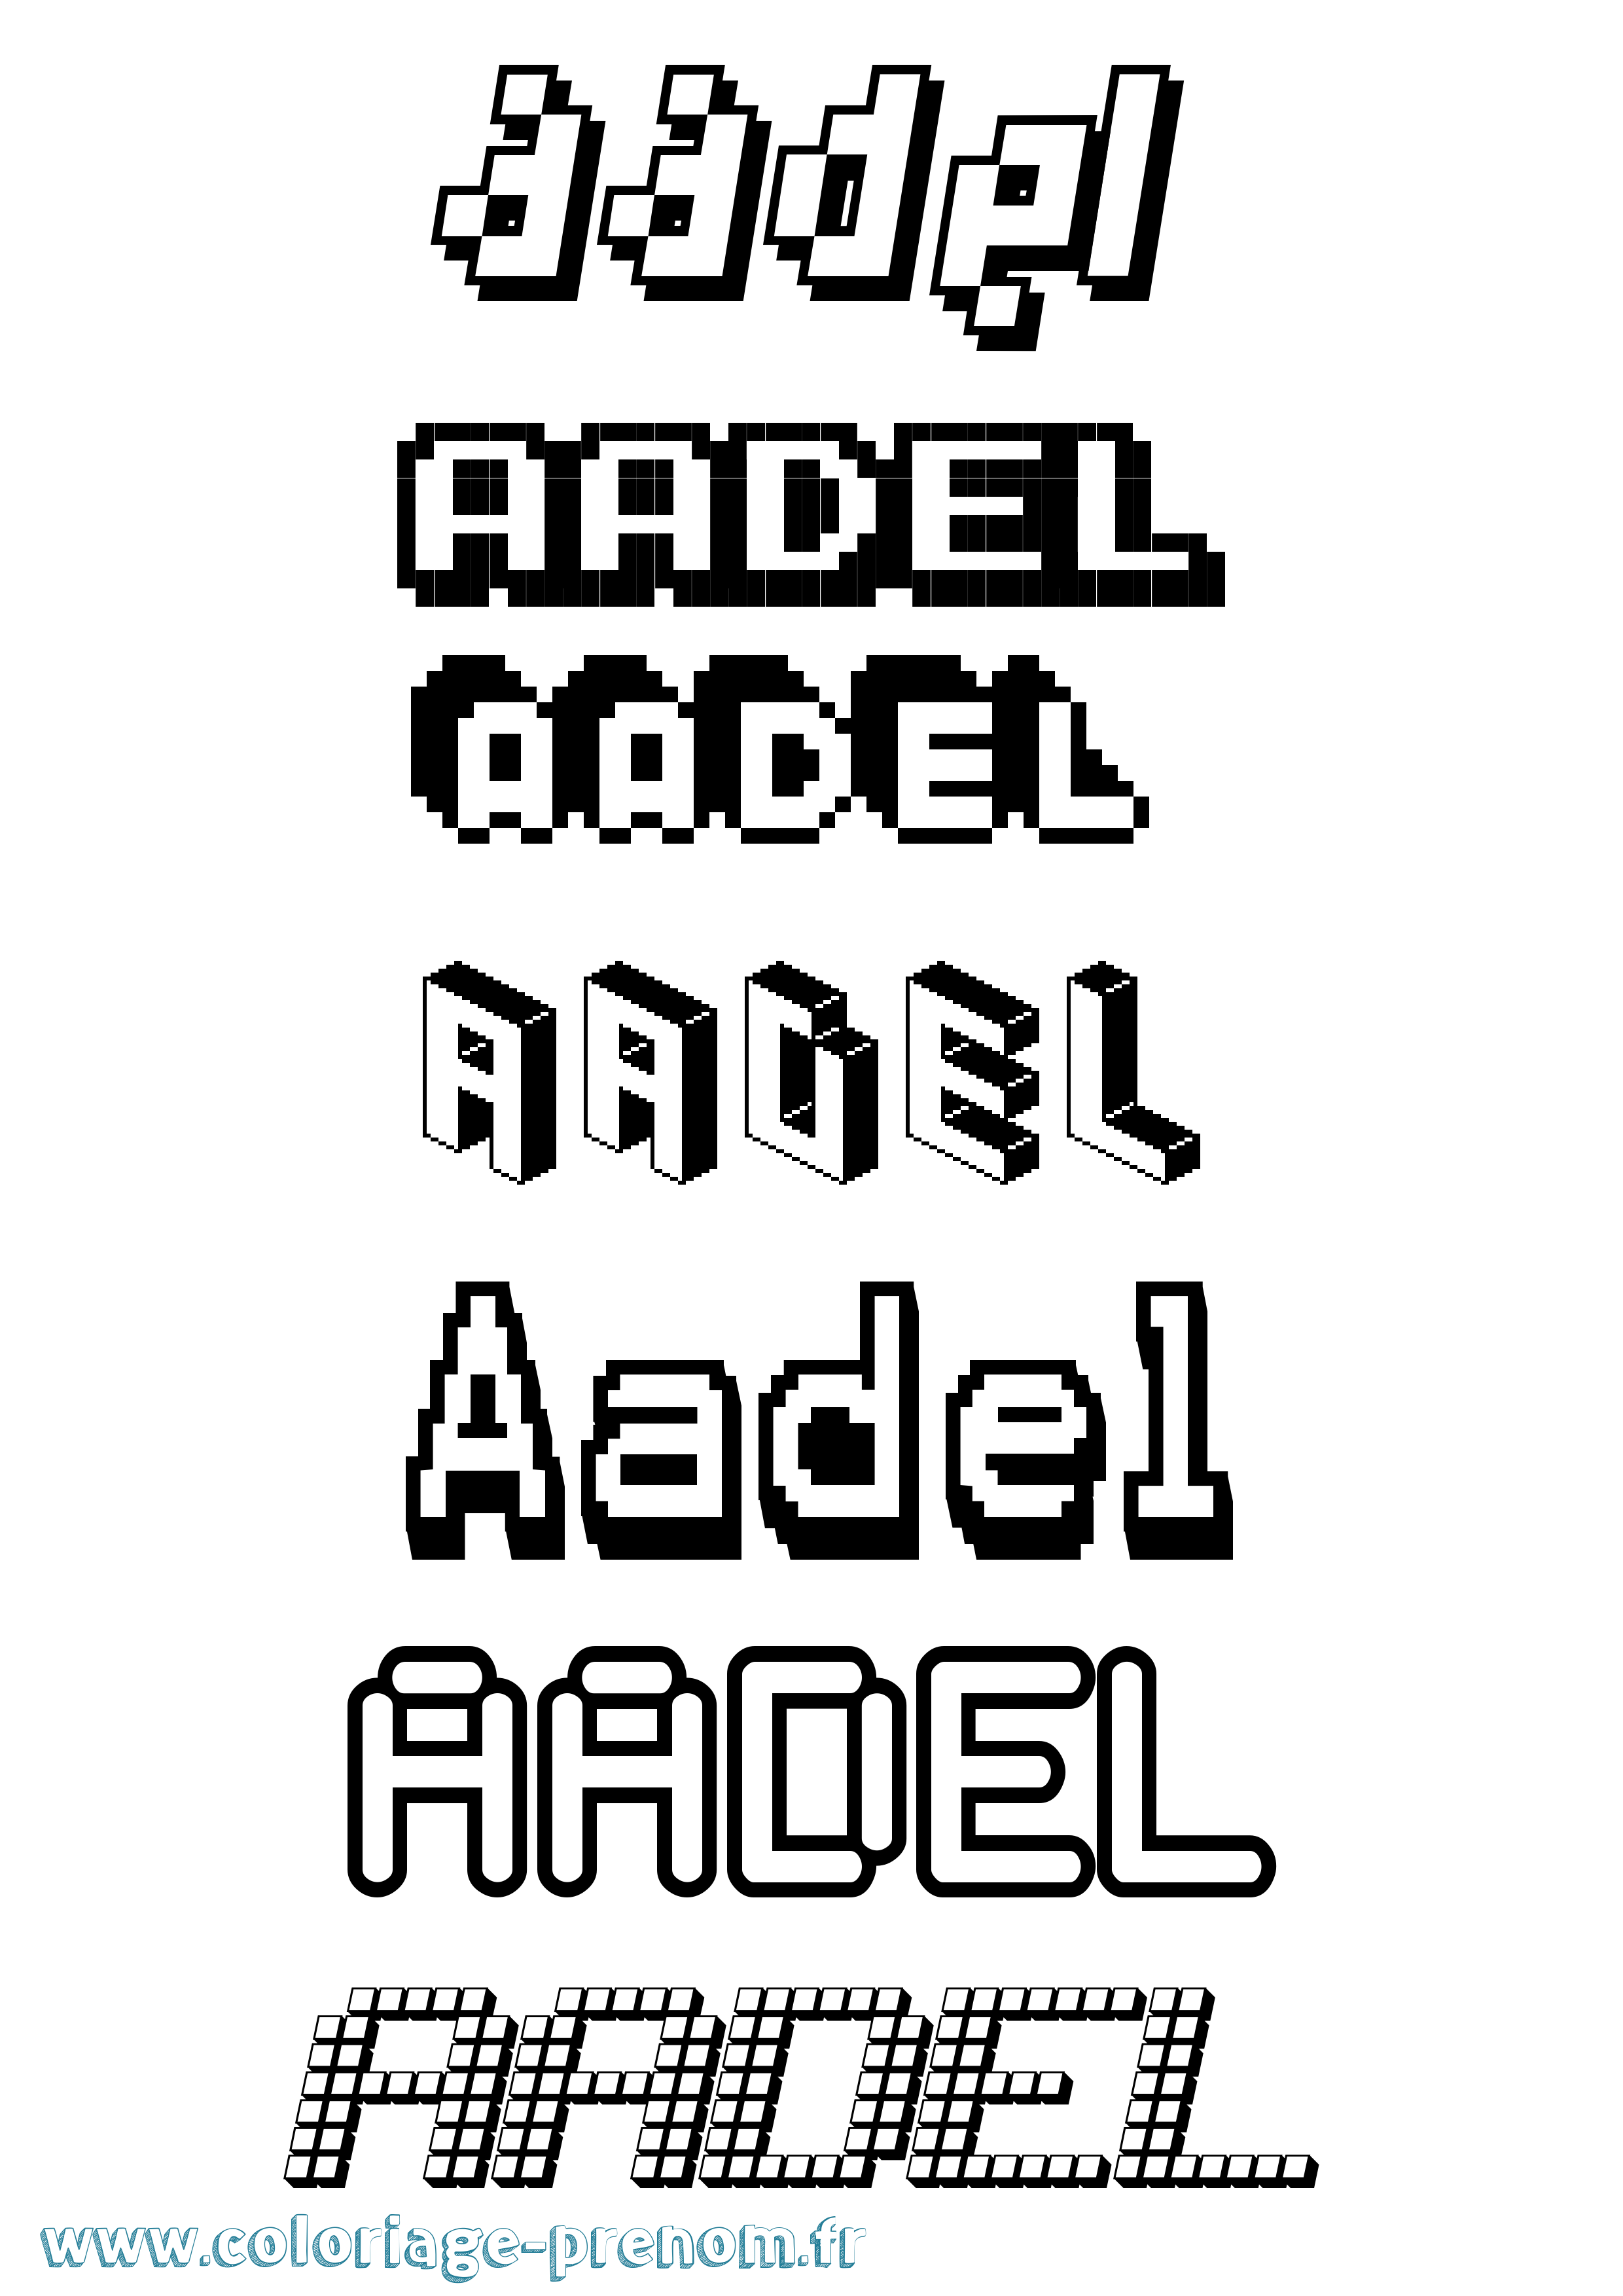 Coloriage prénom Aadel Pixel